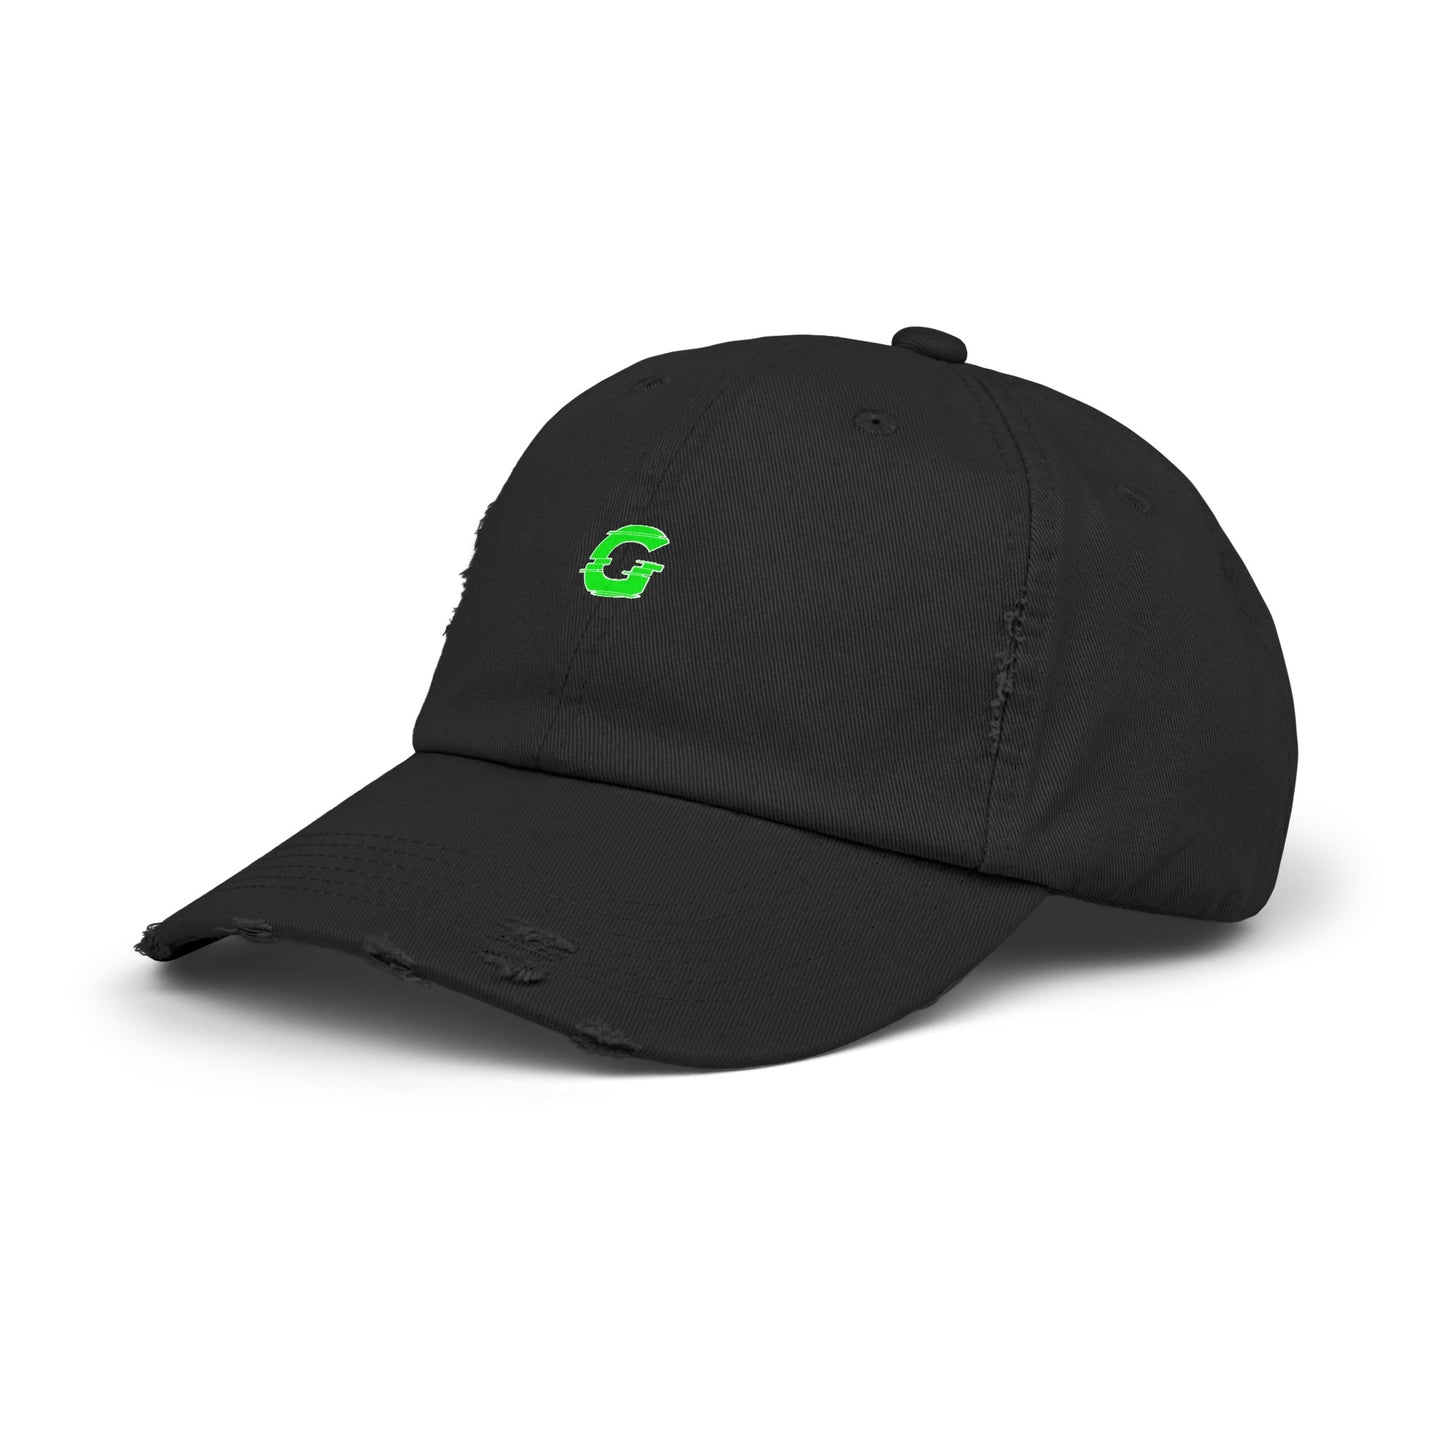 G Hat